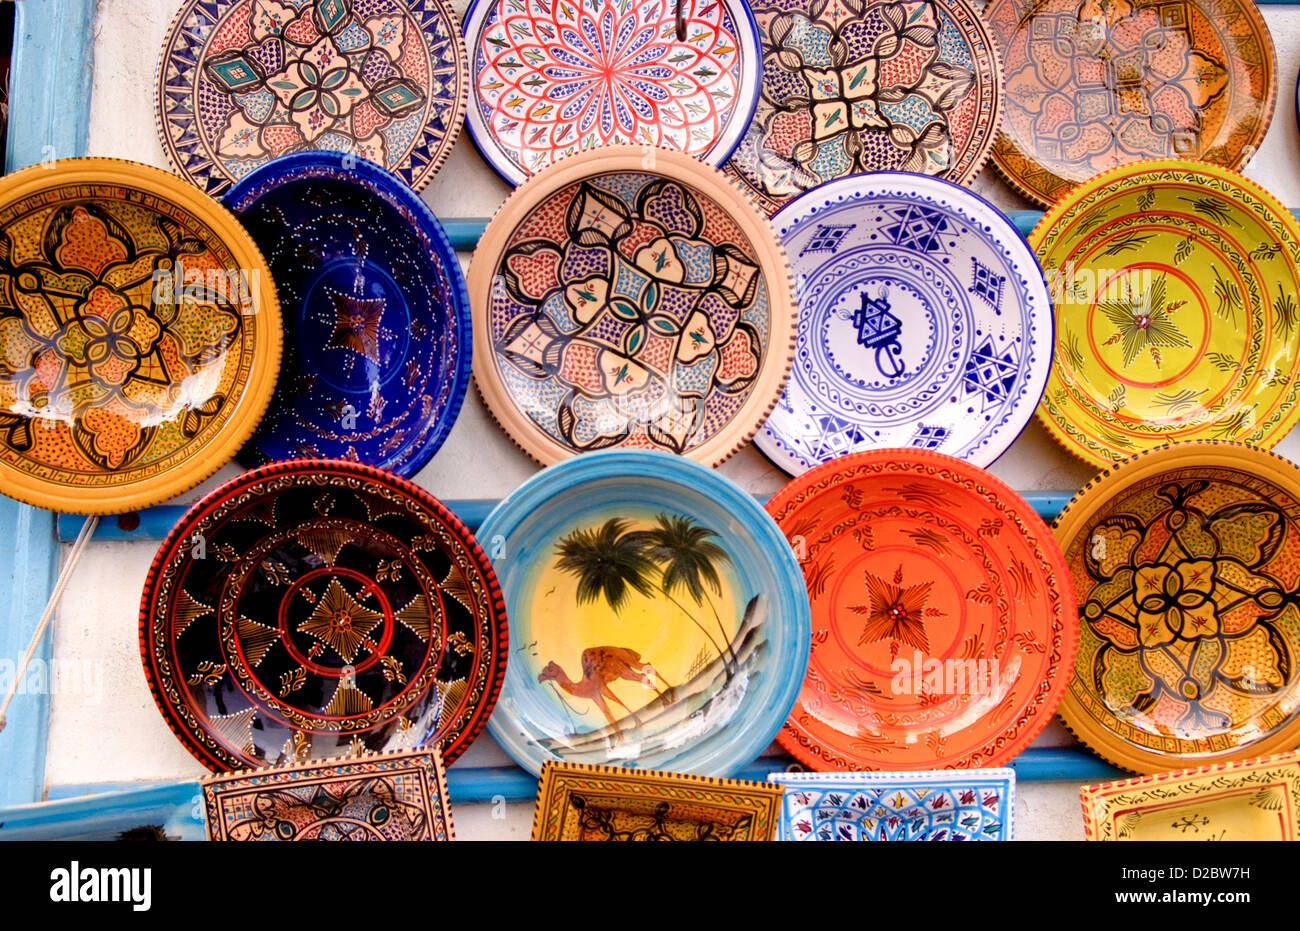 Artwork Plates For Sale In Medina Area Of Tunis, Tunisia Stock Photo